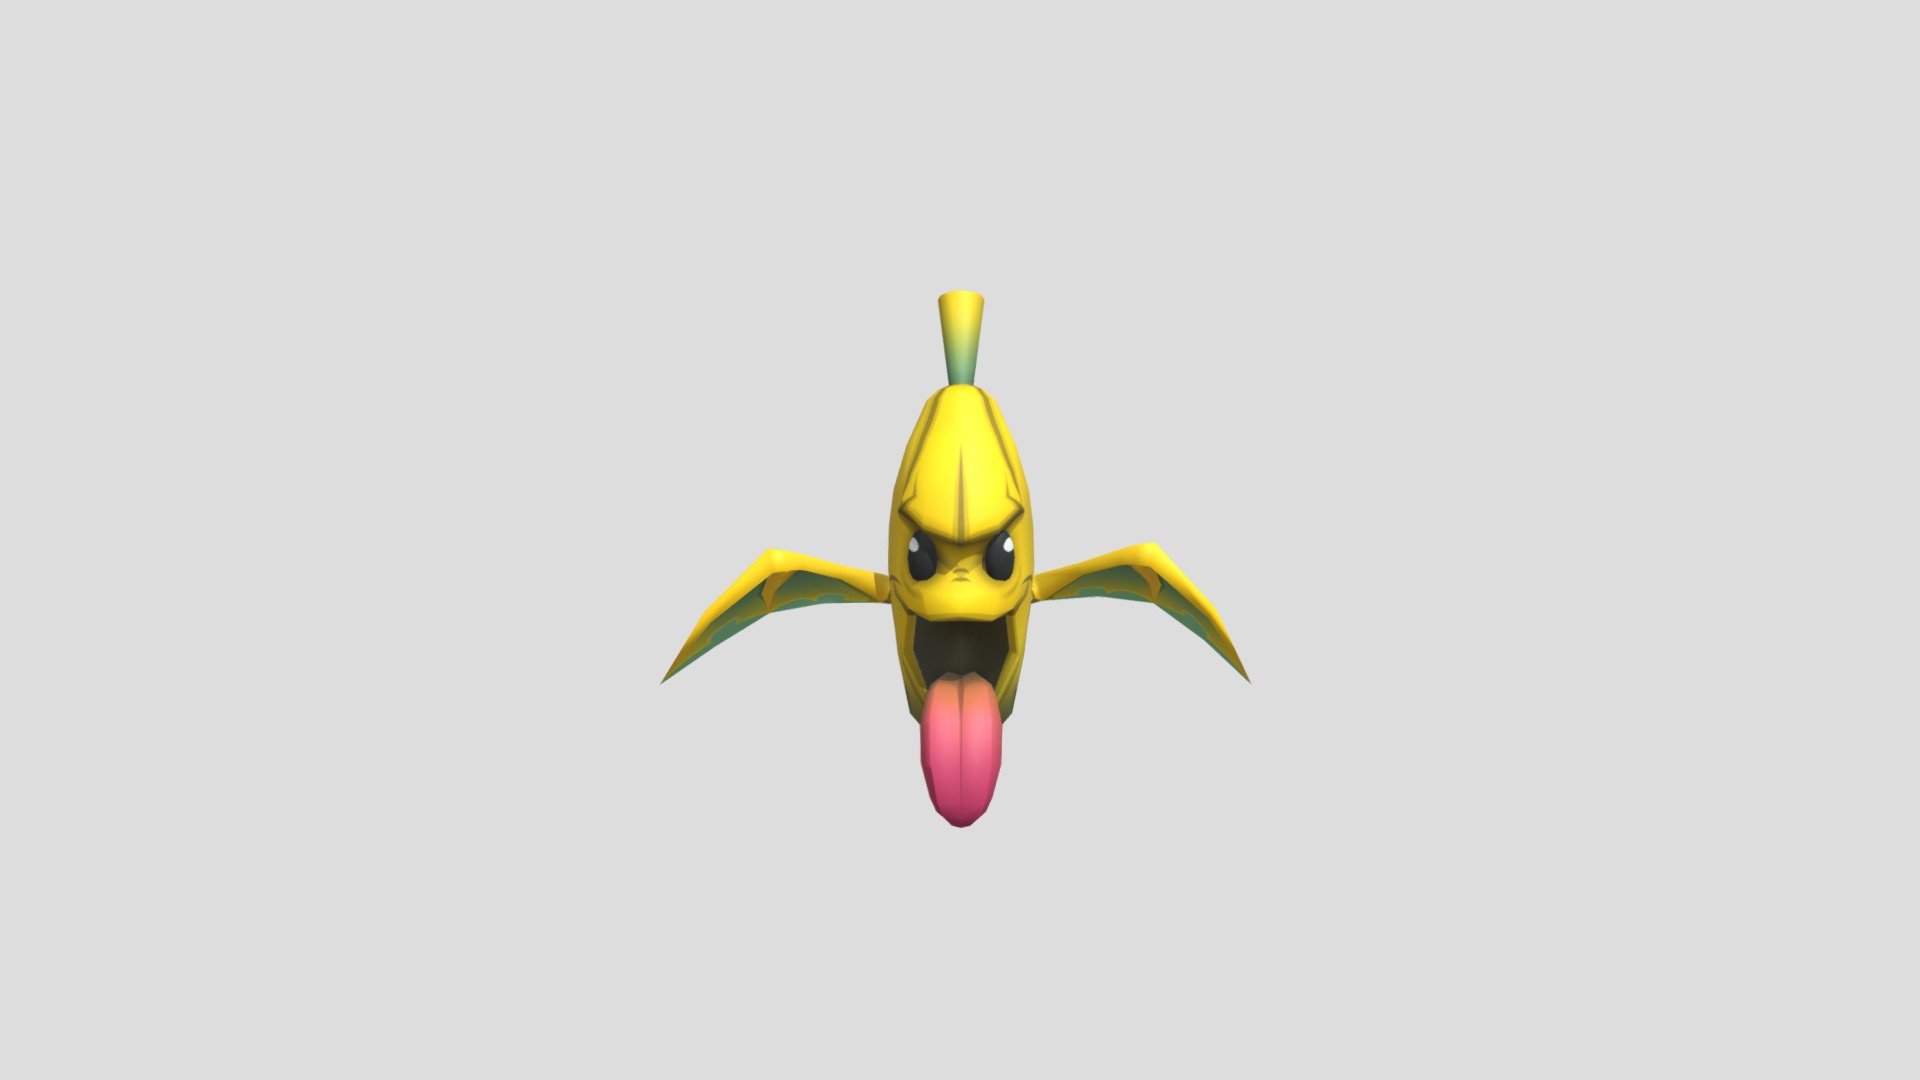 3D Low poly Banana model for a game - Banana_Devil - 3D model by aavega 3d model